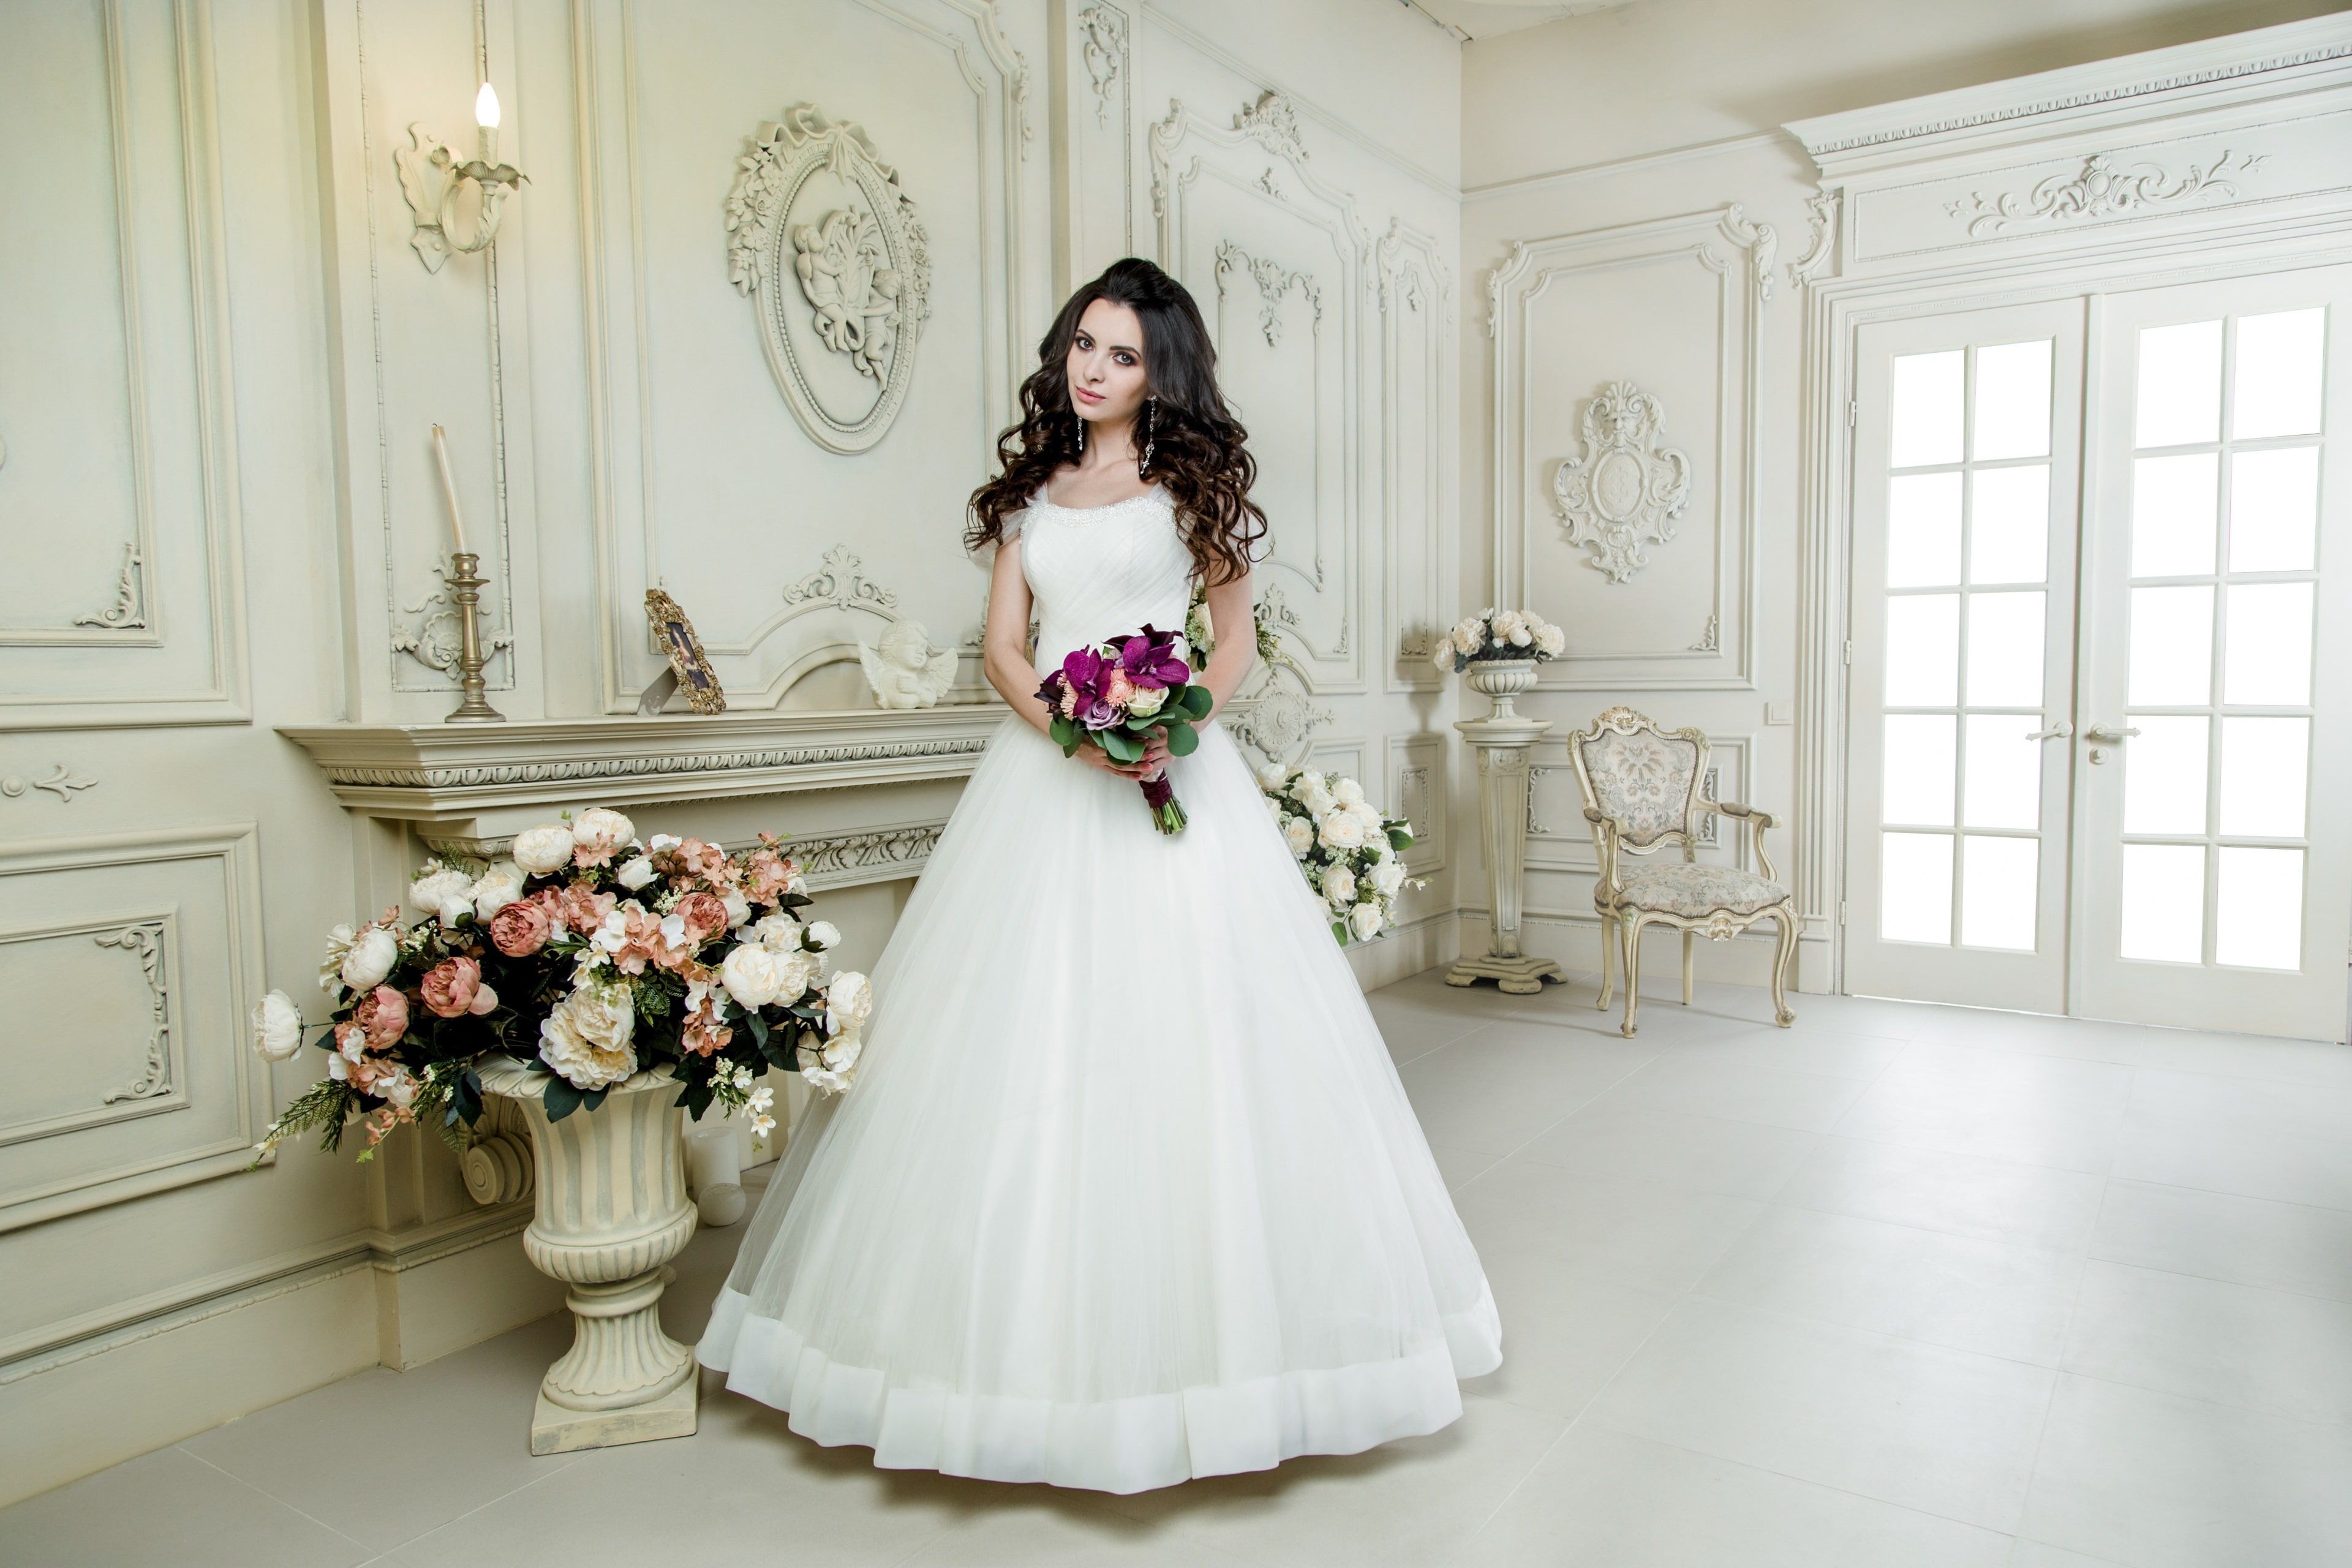 bride 4k HD desktop background K #wallpaper #hdwallpaper #desktop. Bride, Luxury brides, HD desktop